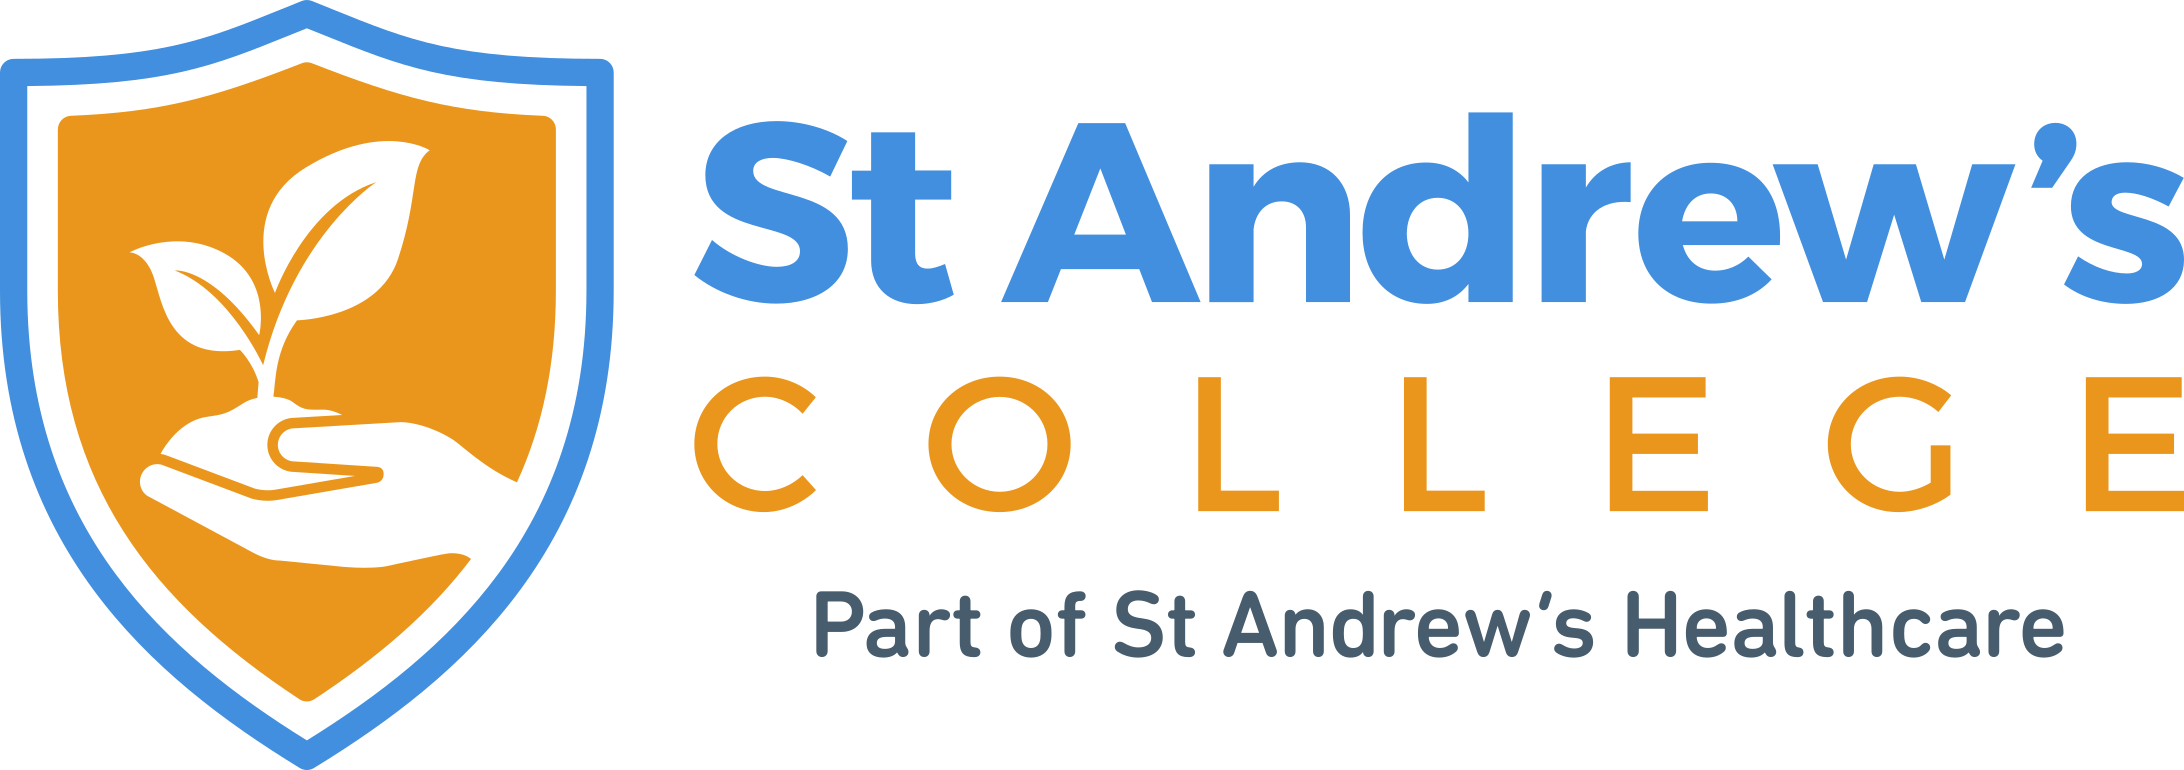 St Andrews College Logo RGB Horizontal v2